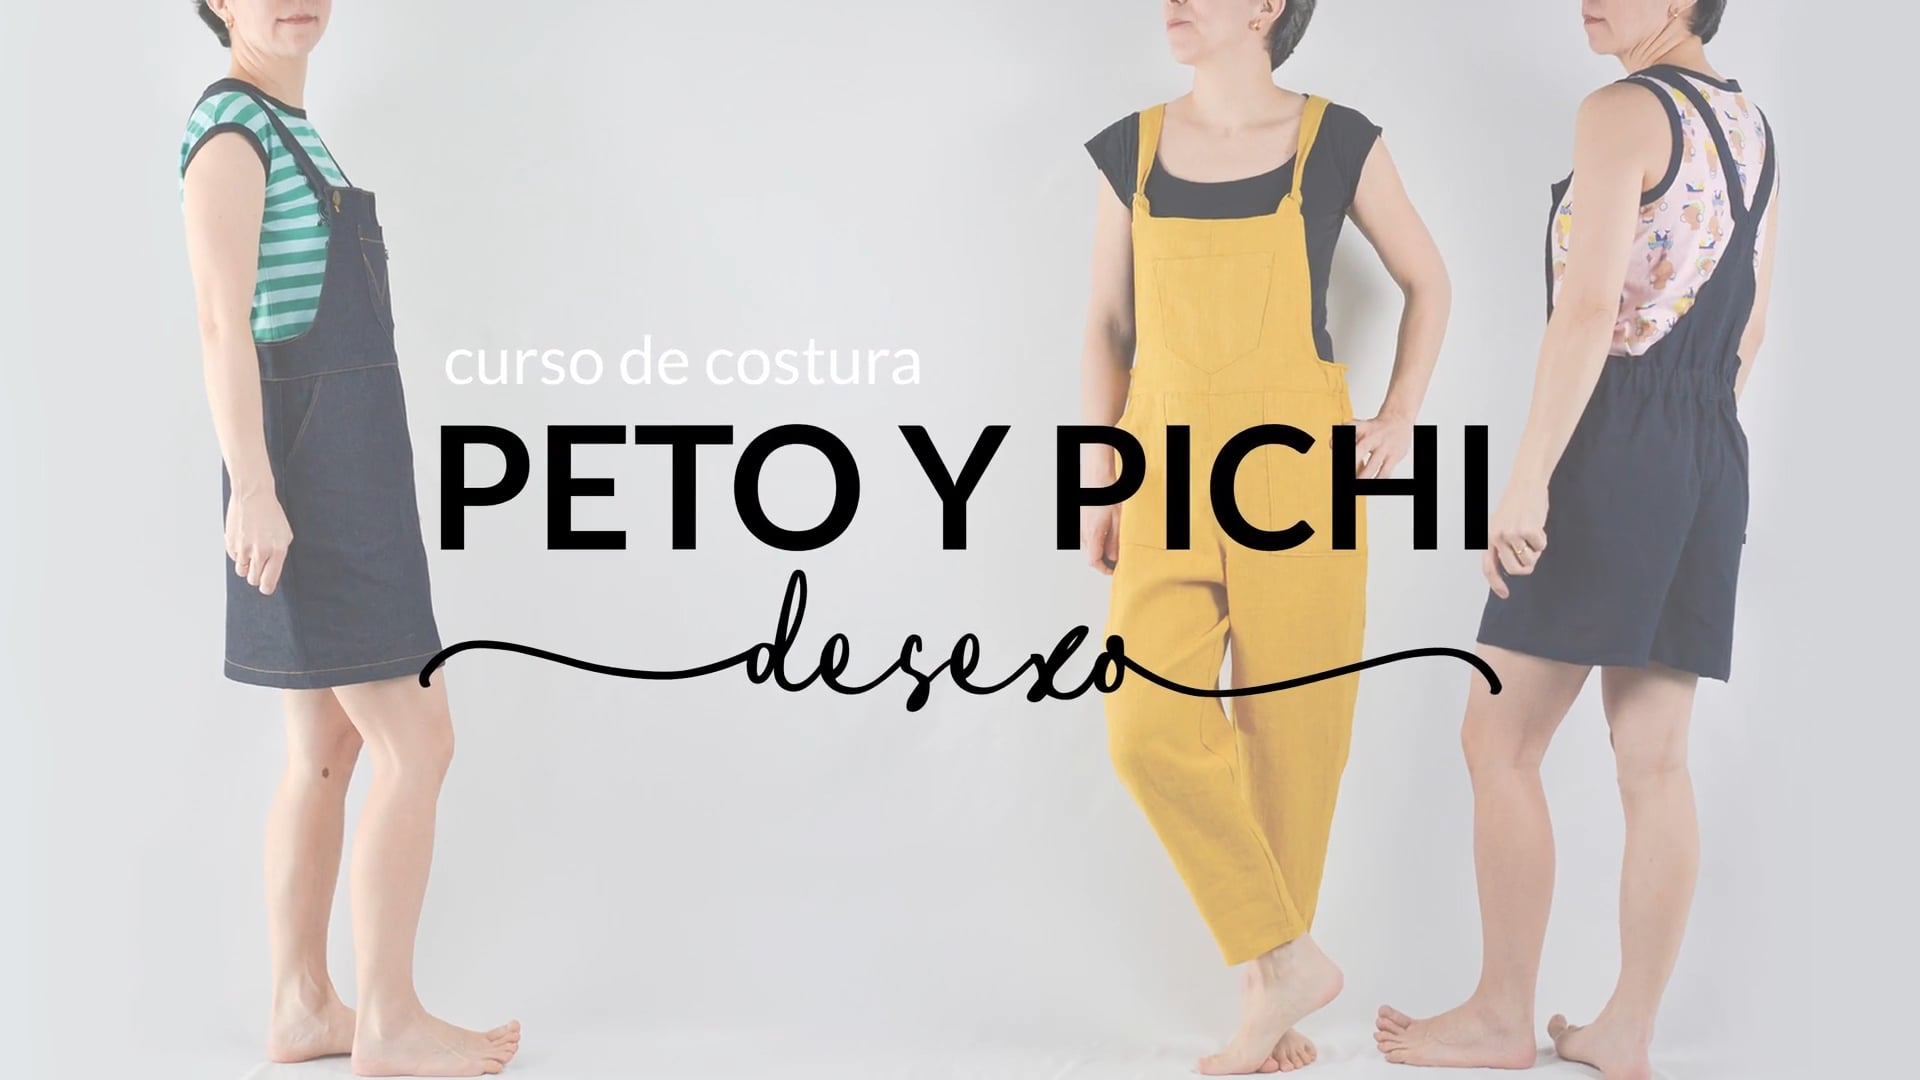 online peto pichi Desexo on Vimeo